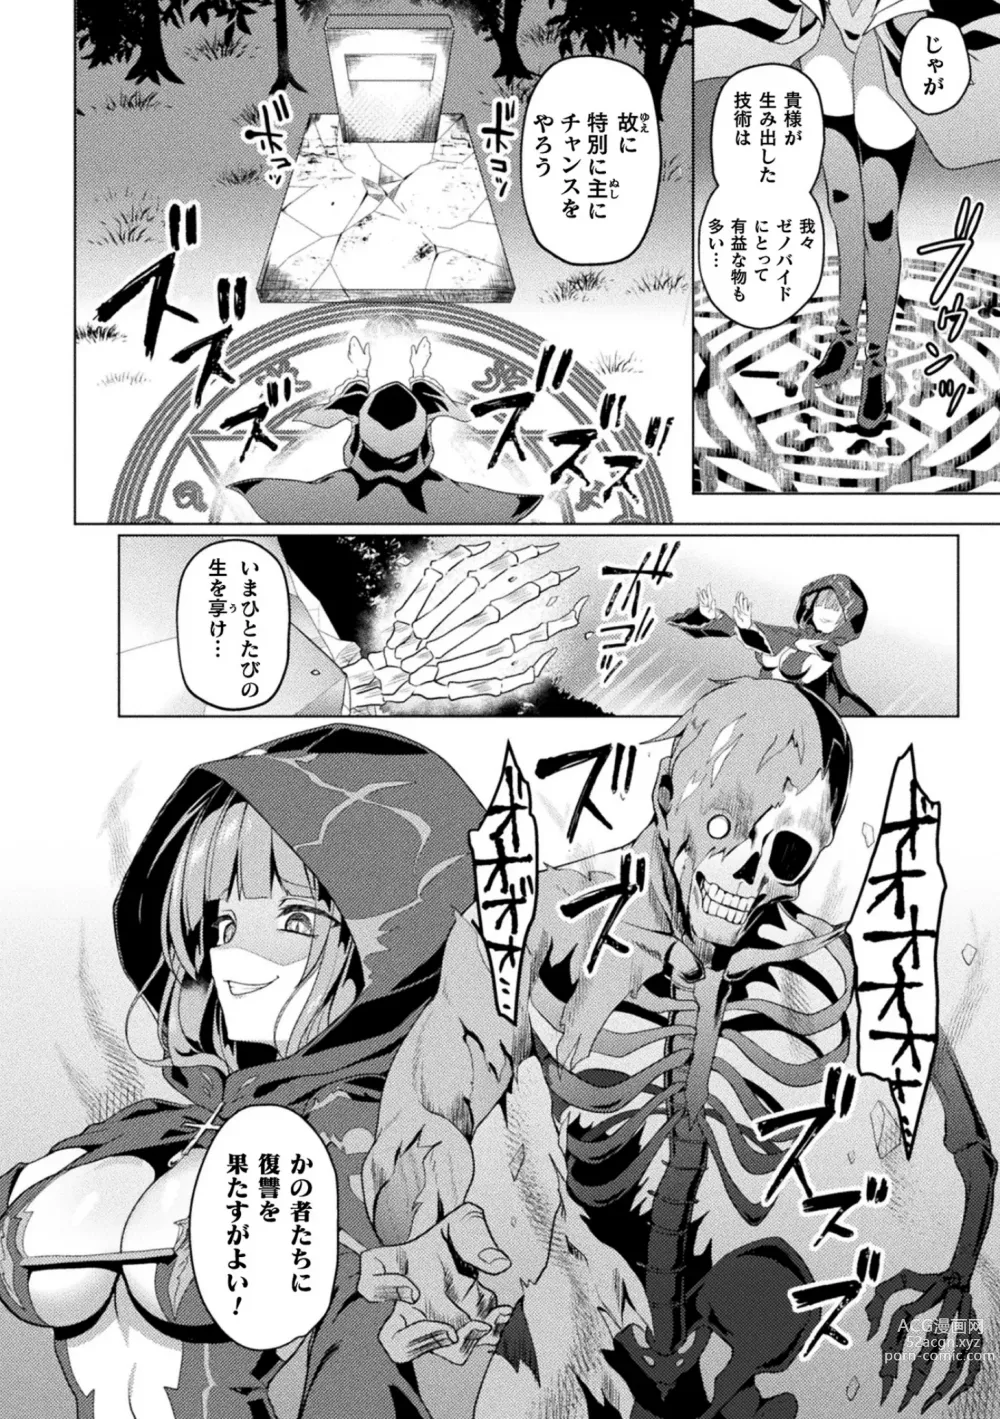 Page 6 of manga Kukkoro Heroines Vol. 31